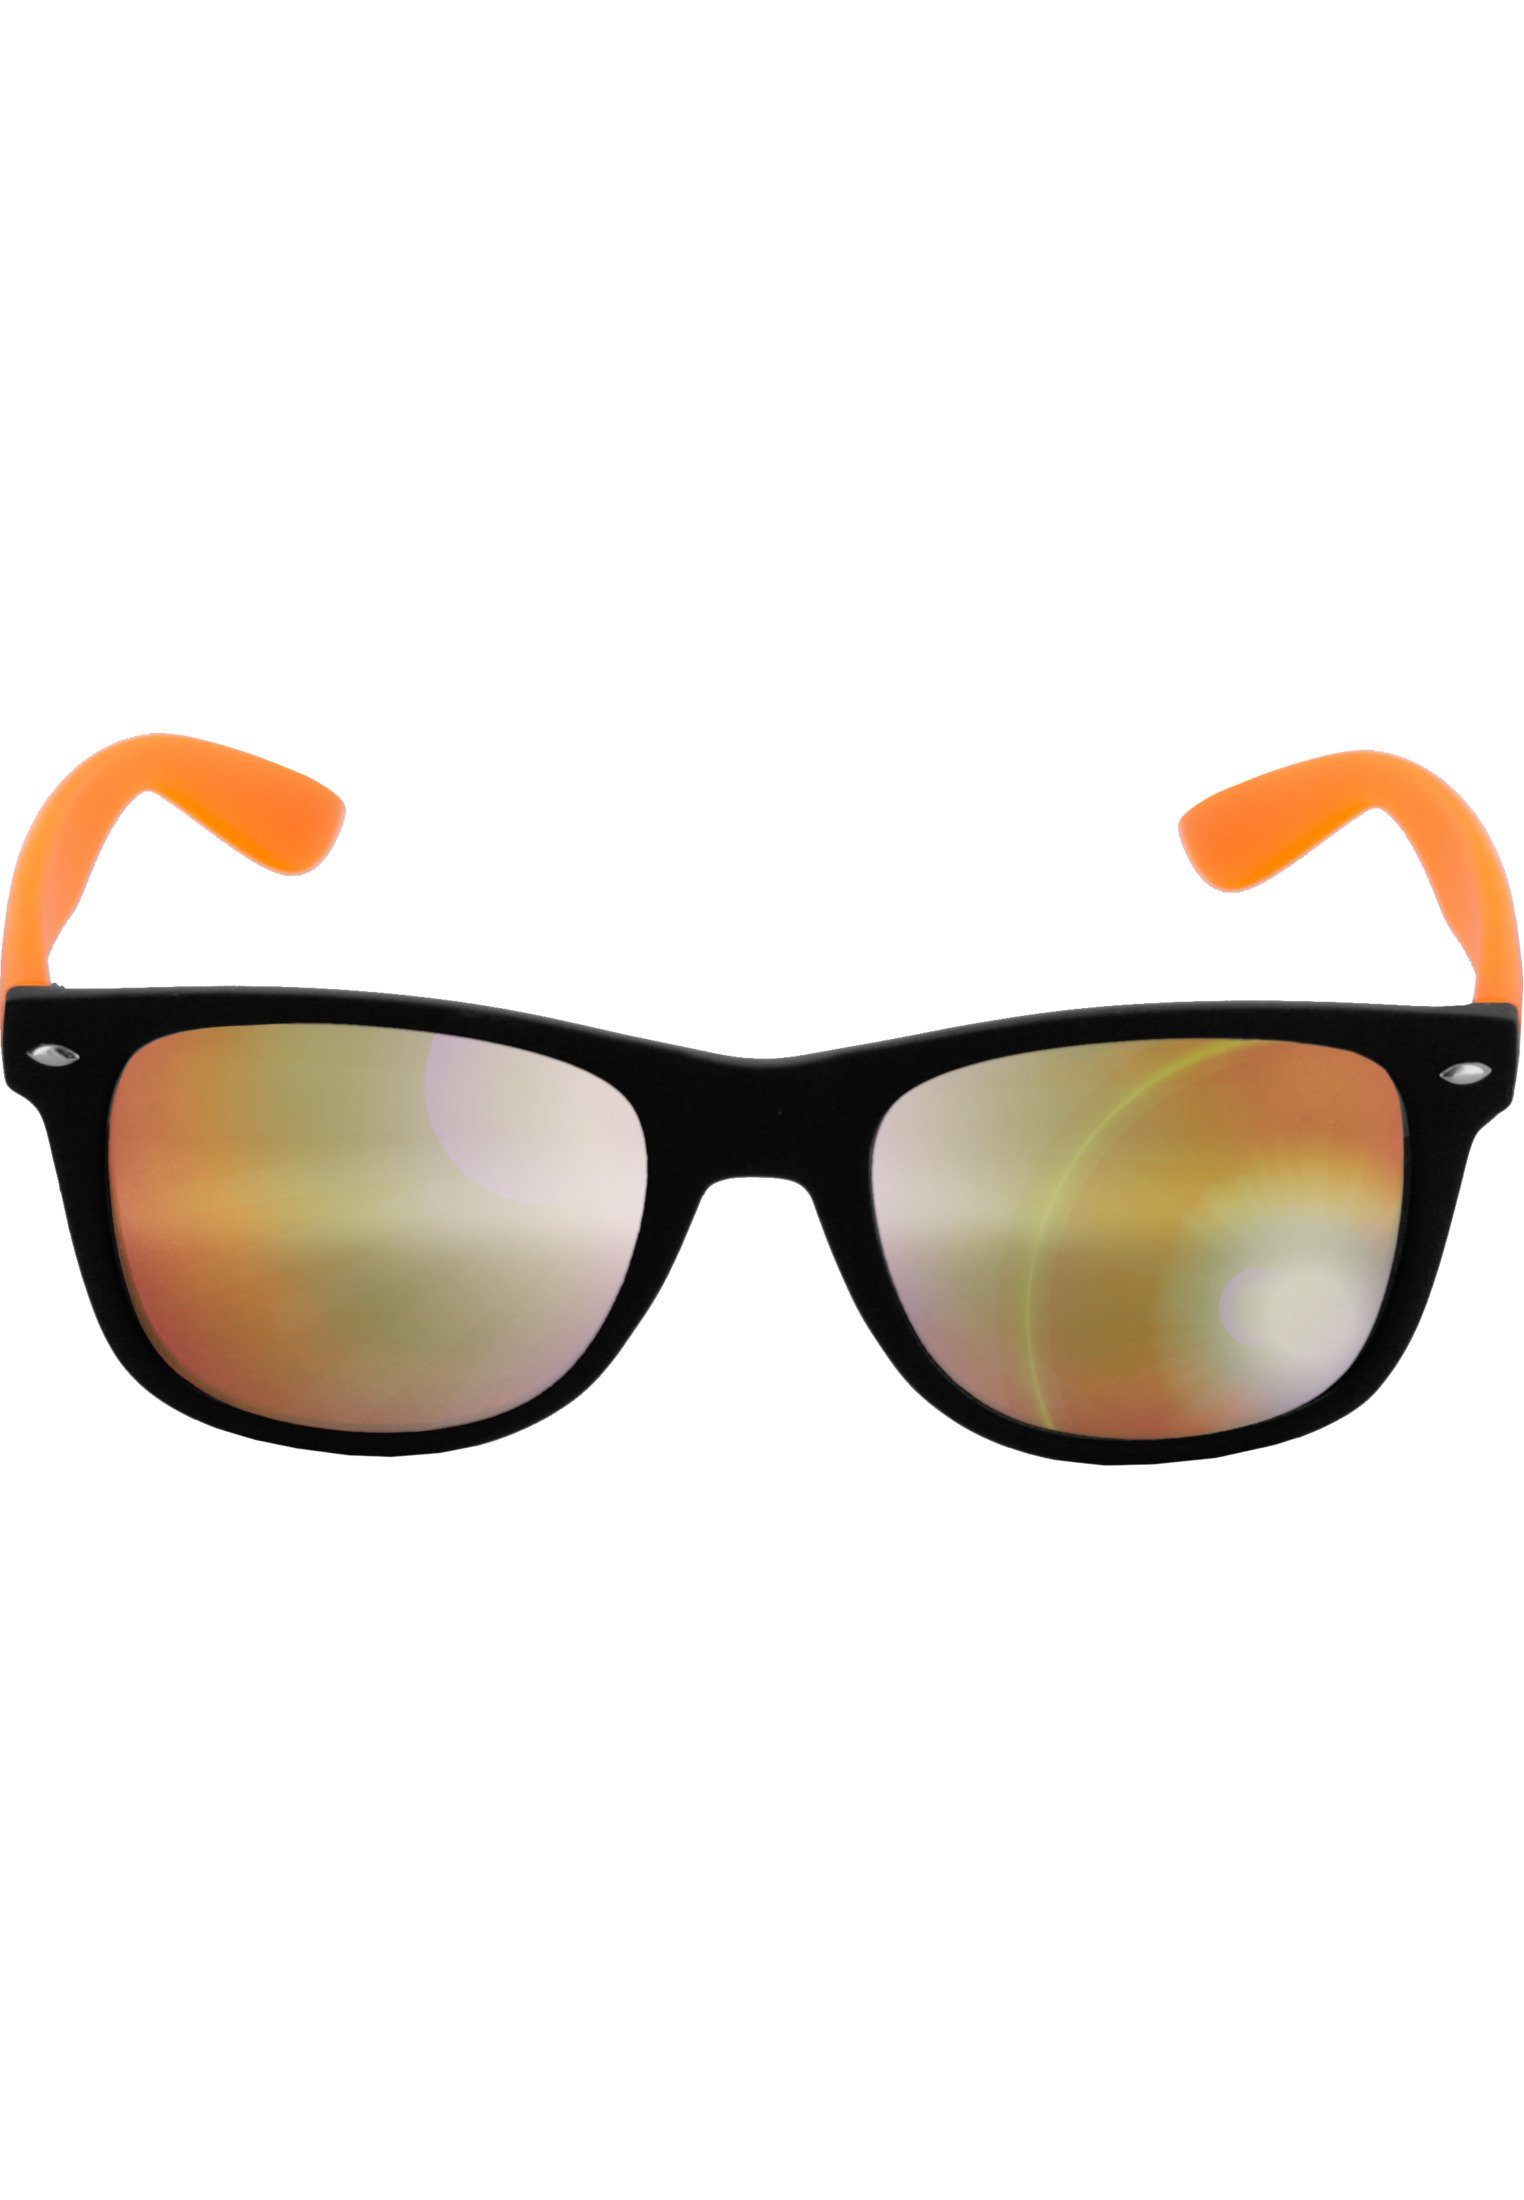 MSTRDS Sonnenbrille Accessoires Sunglasses Likoma Mirror blk/ora/ora